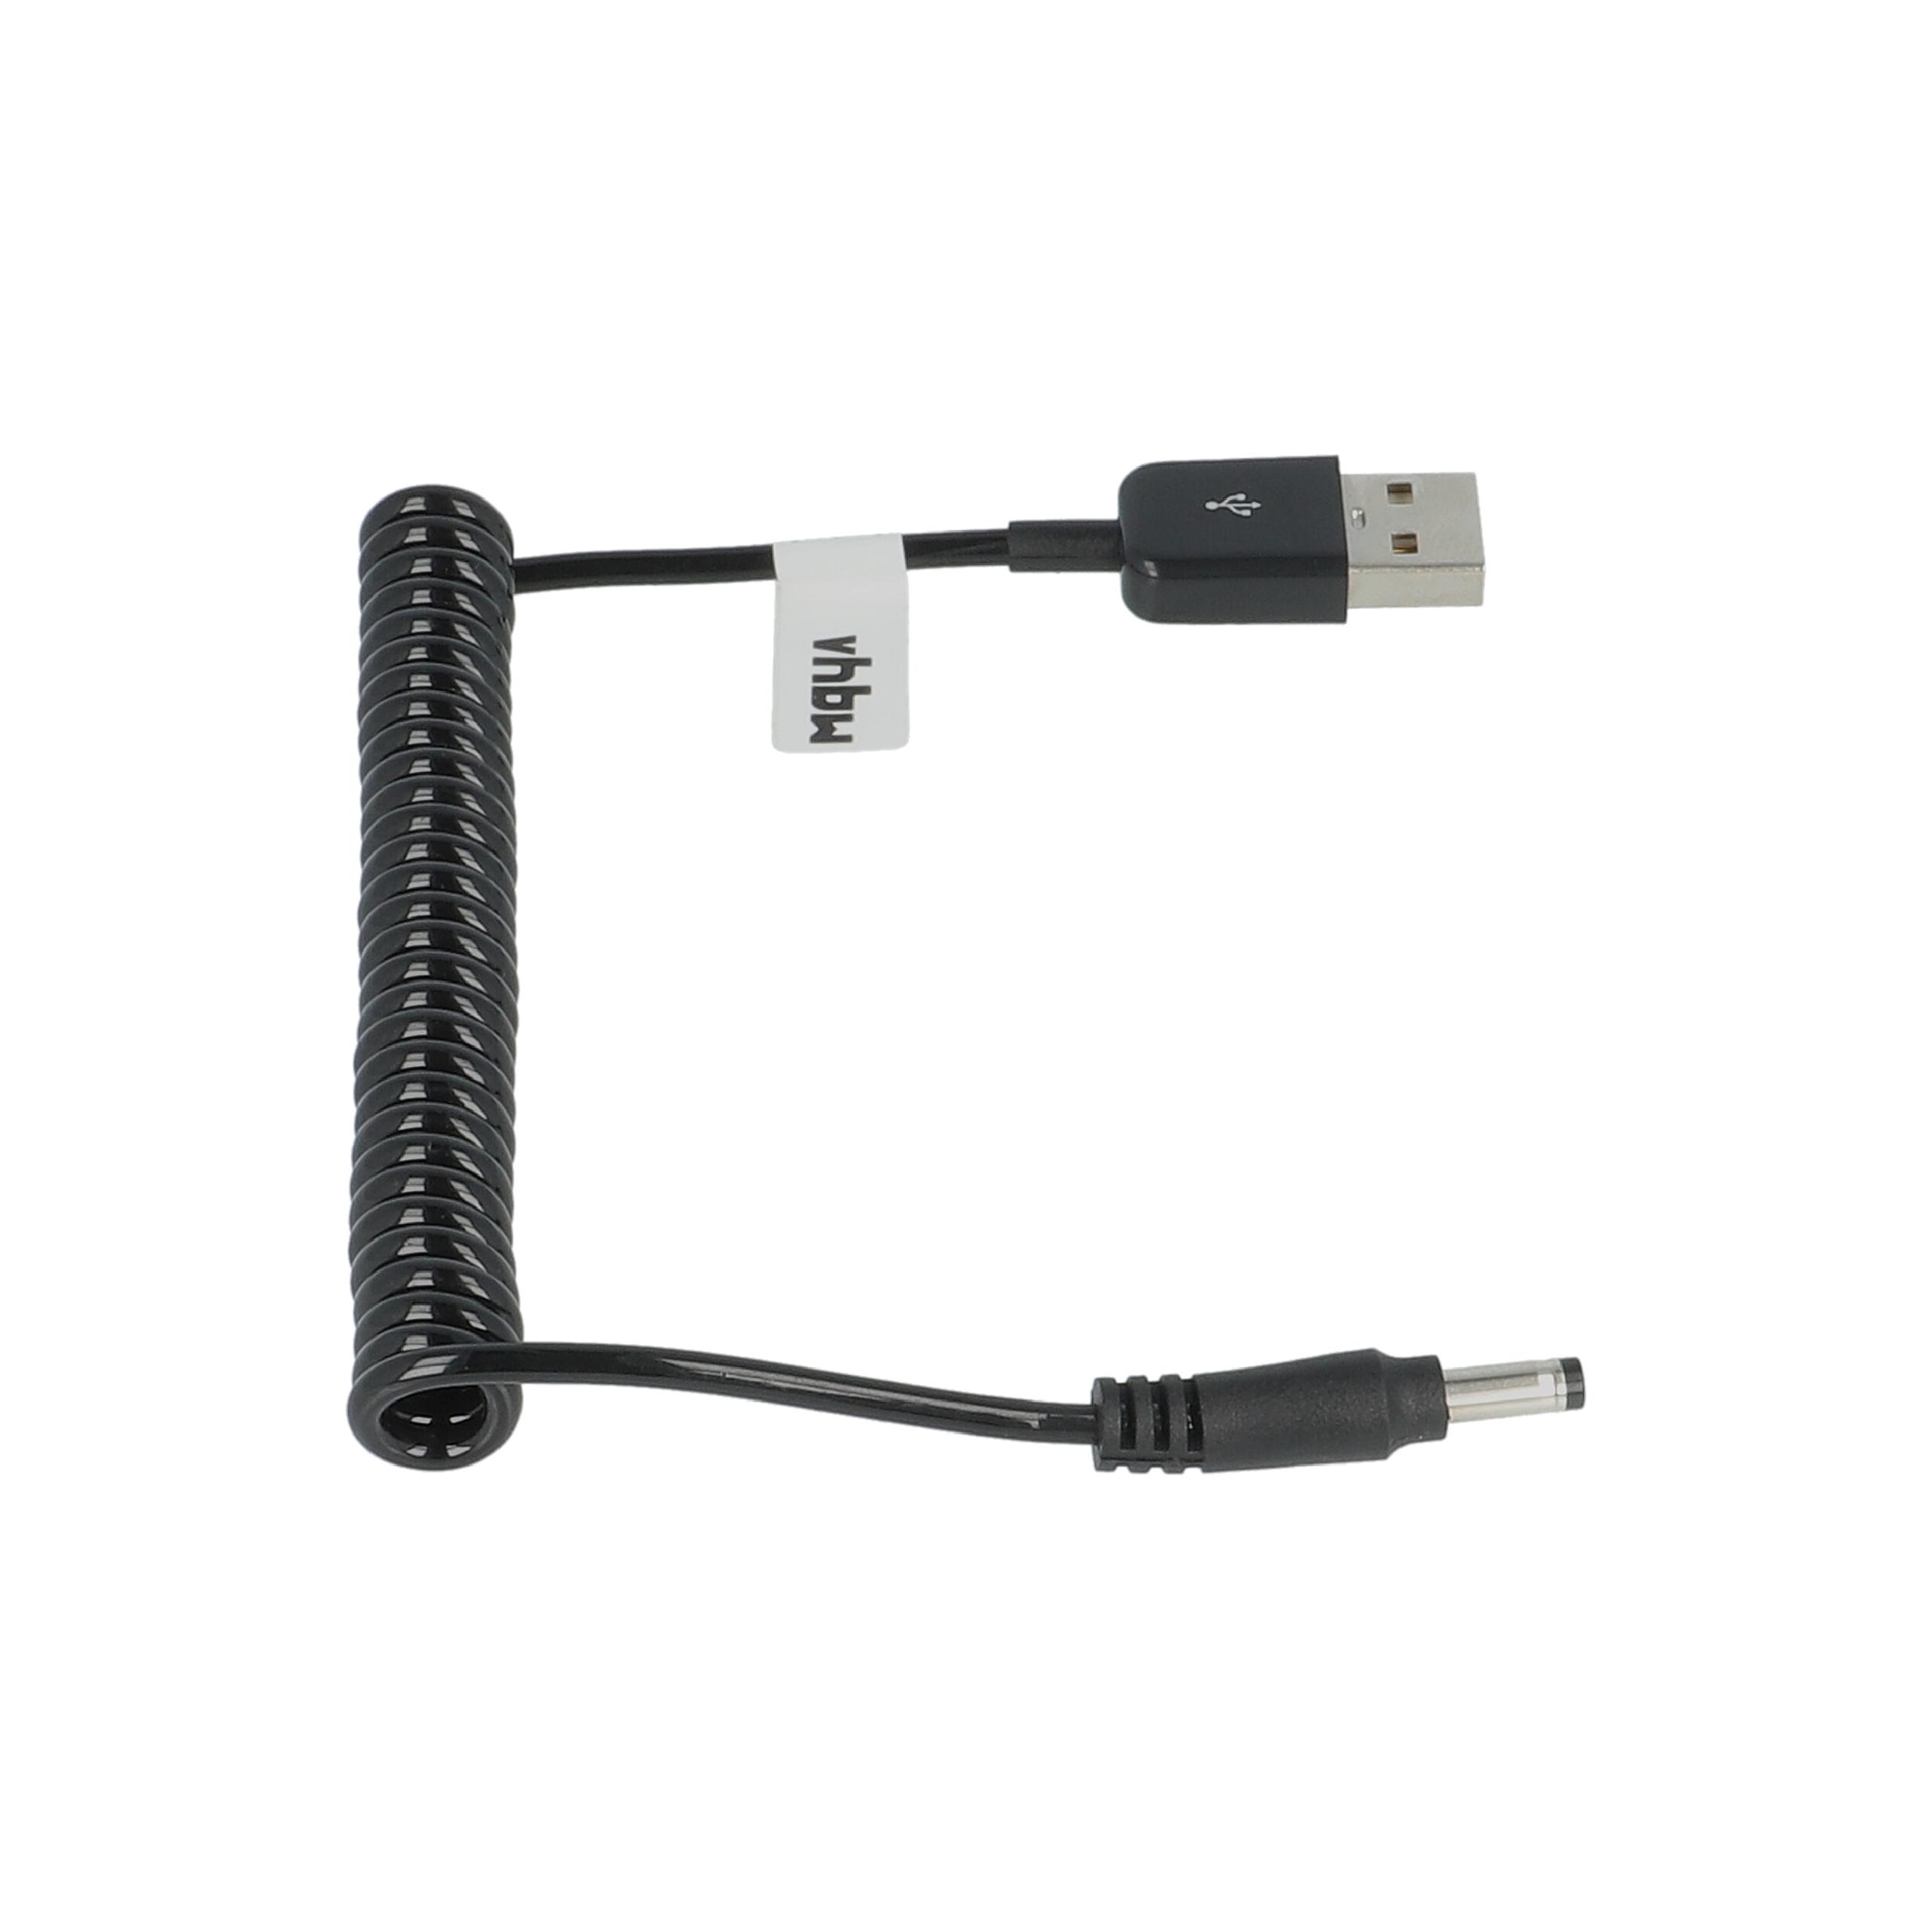 USB Ladekabel als Ersatz für Panasonic K2GHYYS00002 für Panasonic Kamera, Videokamera, Camcorder - 1 m